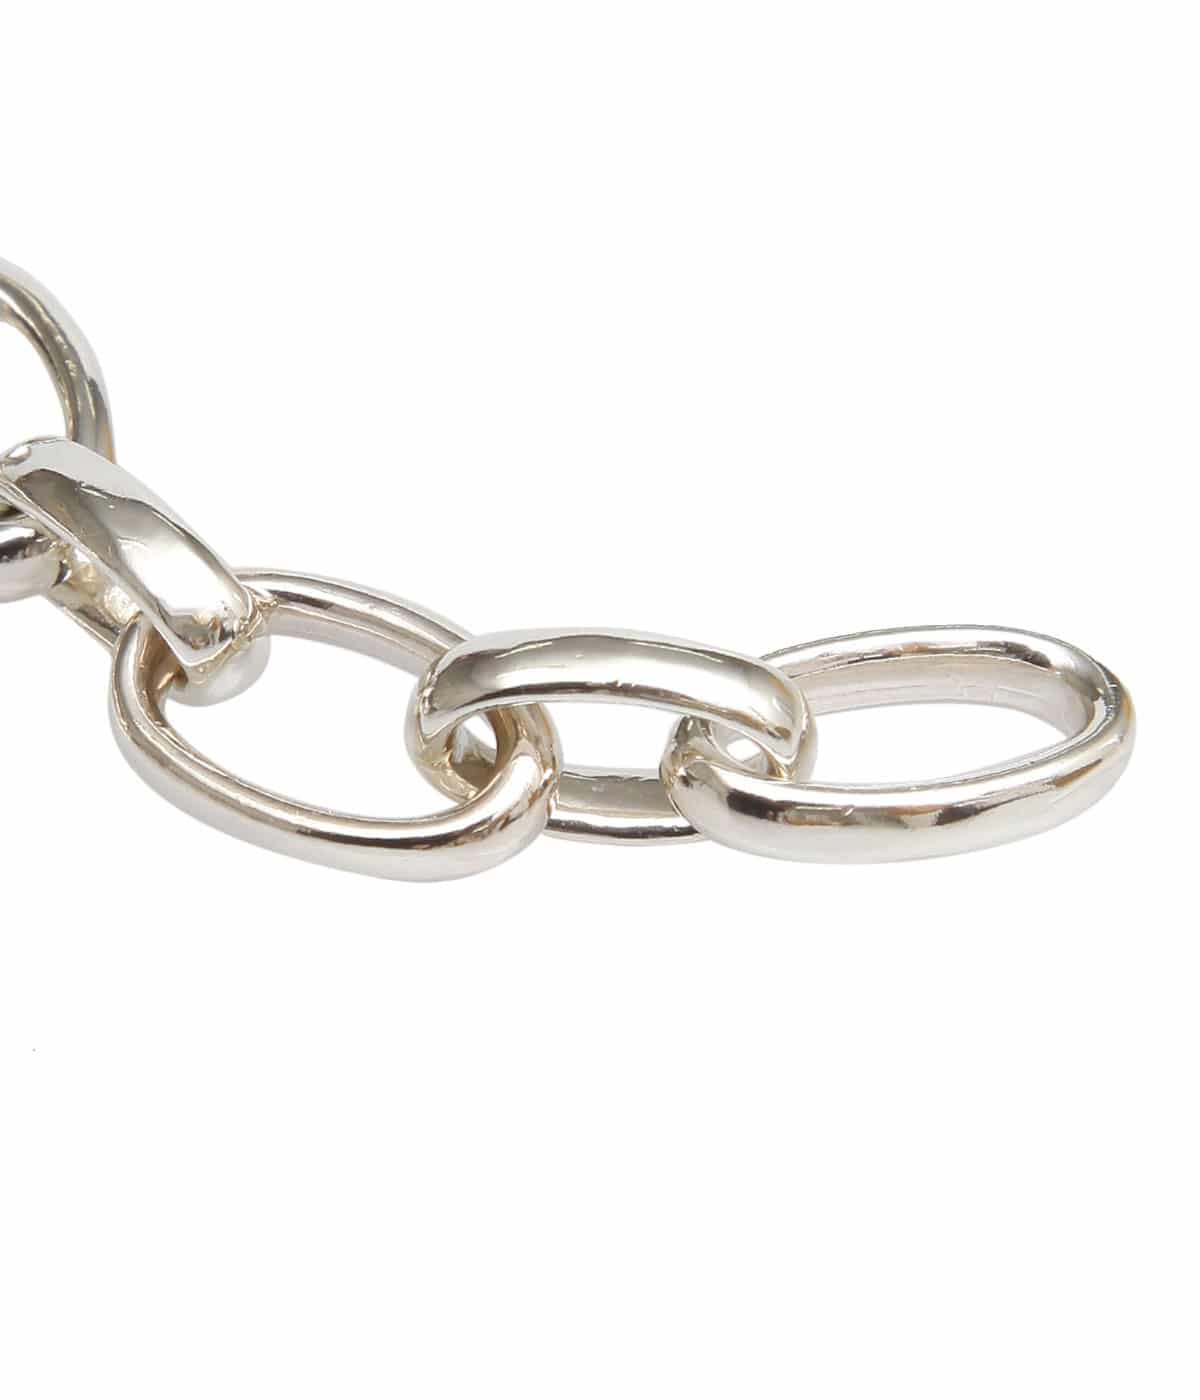 bone shaped handcuffs bracelet?-M